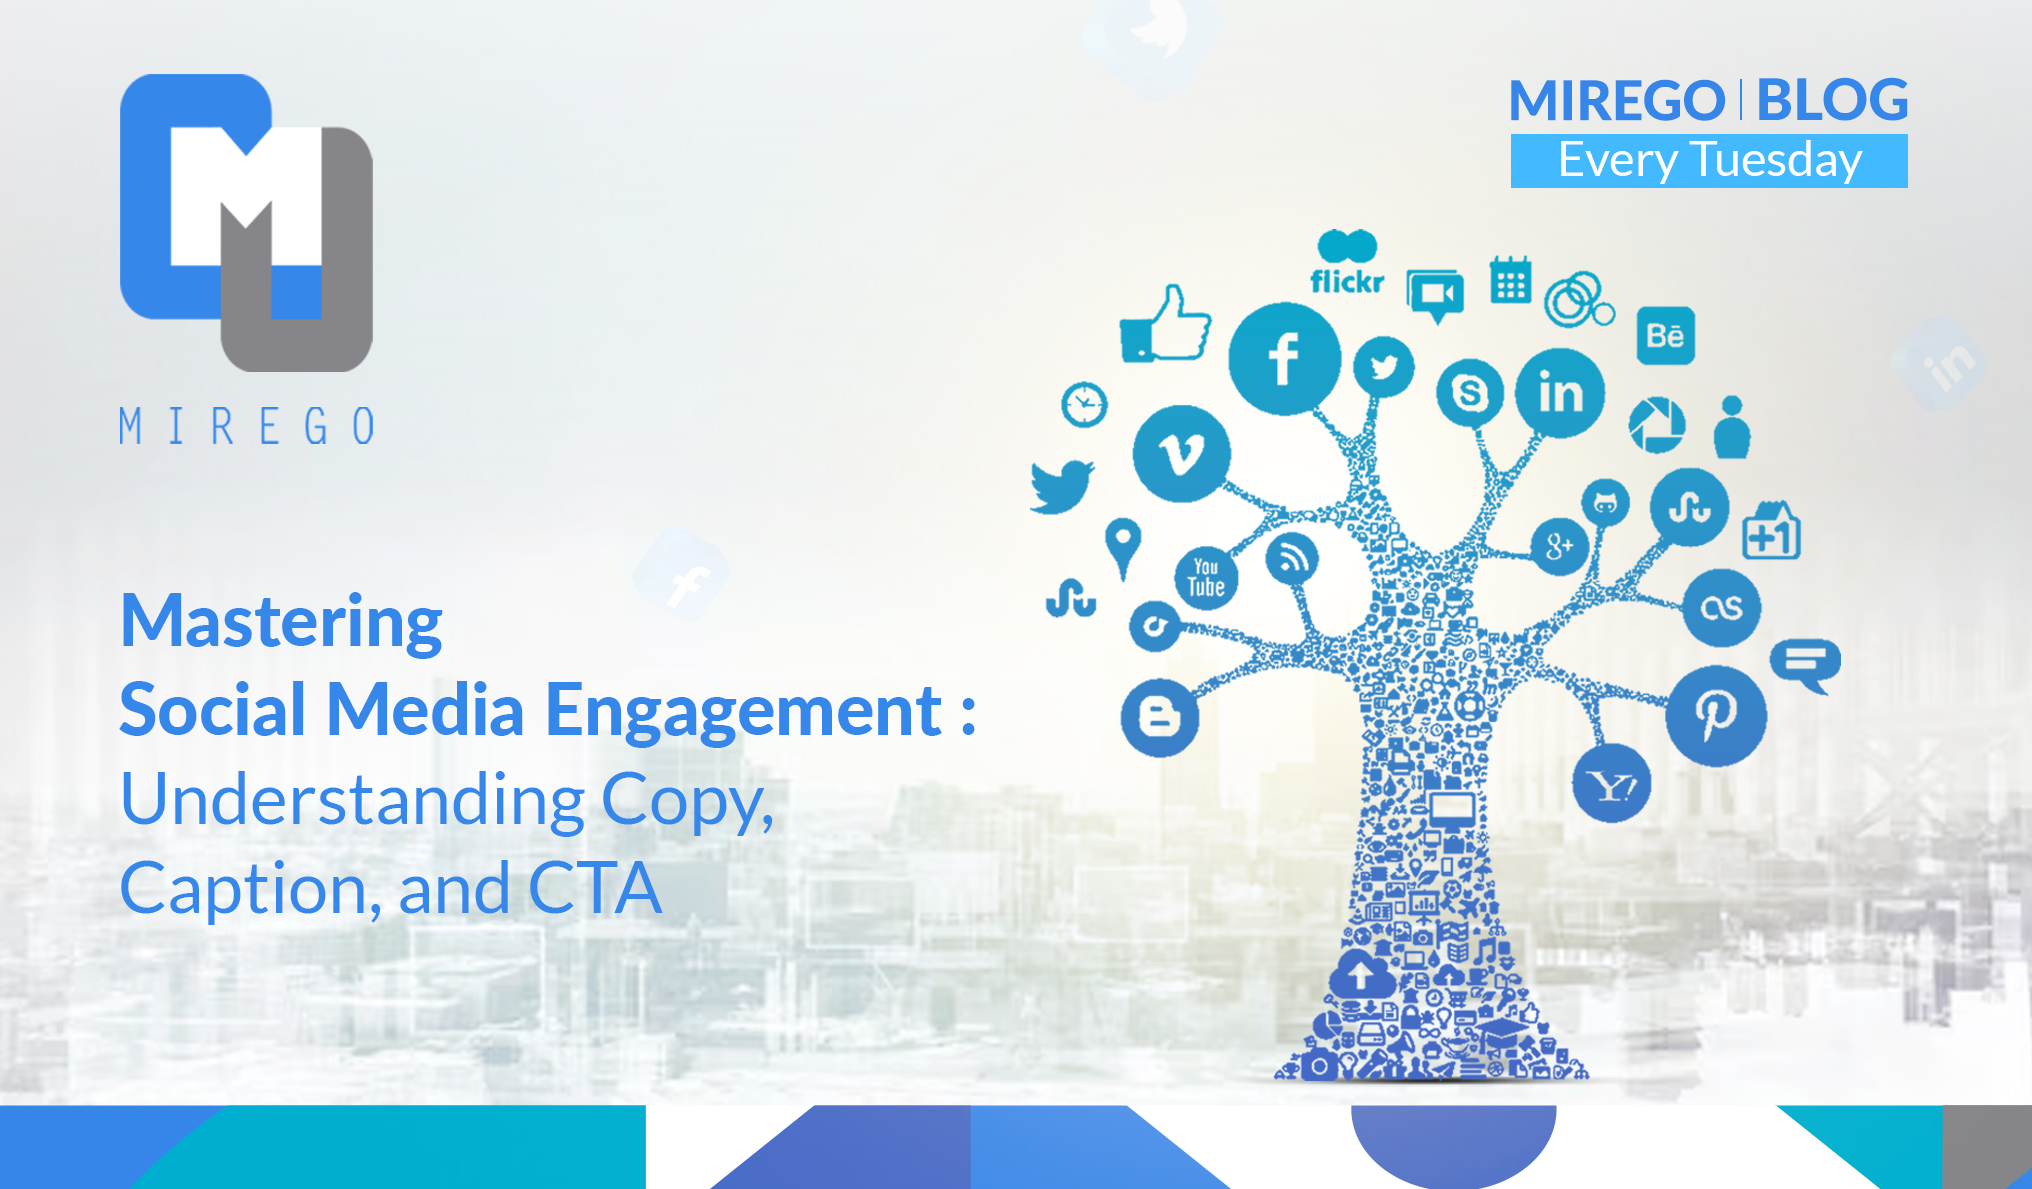  Mastering Social Media Engagement: Understanding Copy, Caption, and CTA